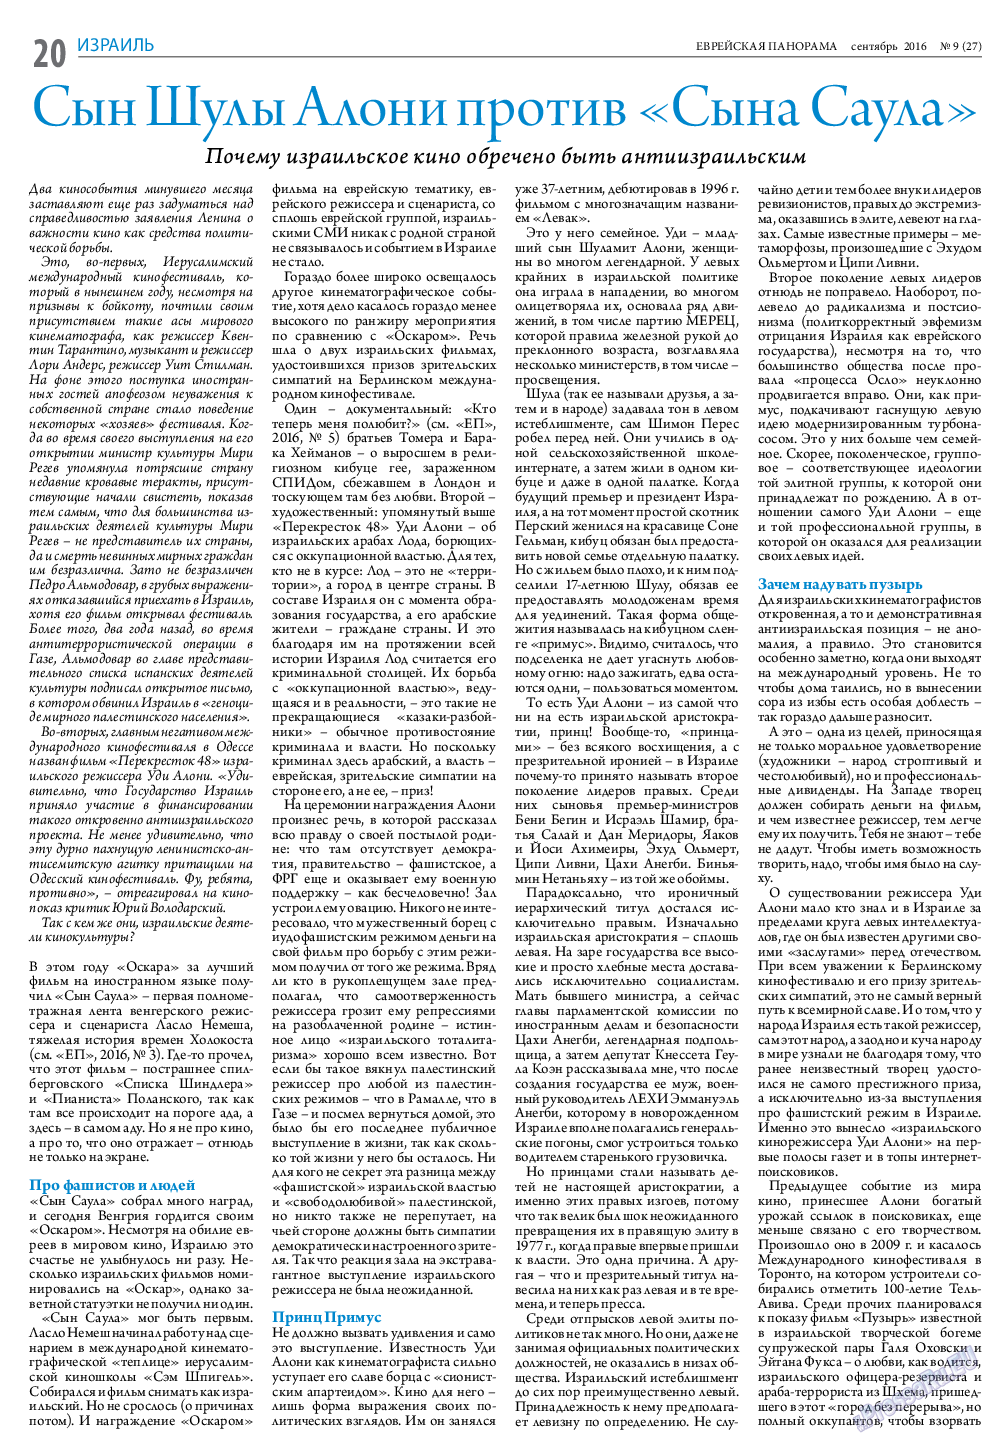 Еврейская панорама, газета. 2016 №9 стр.20